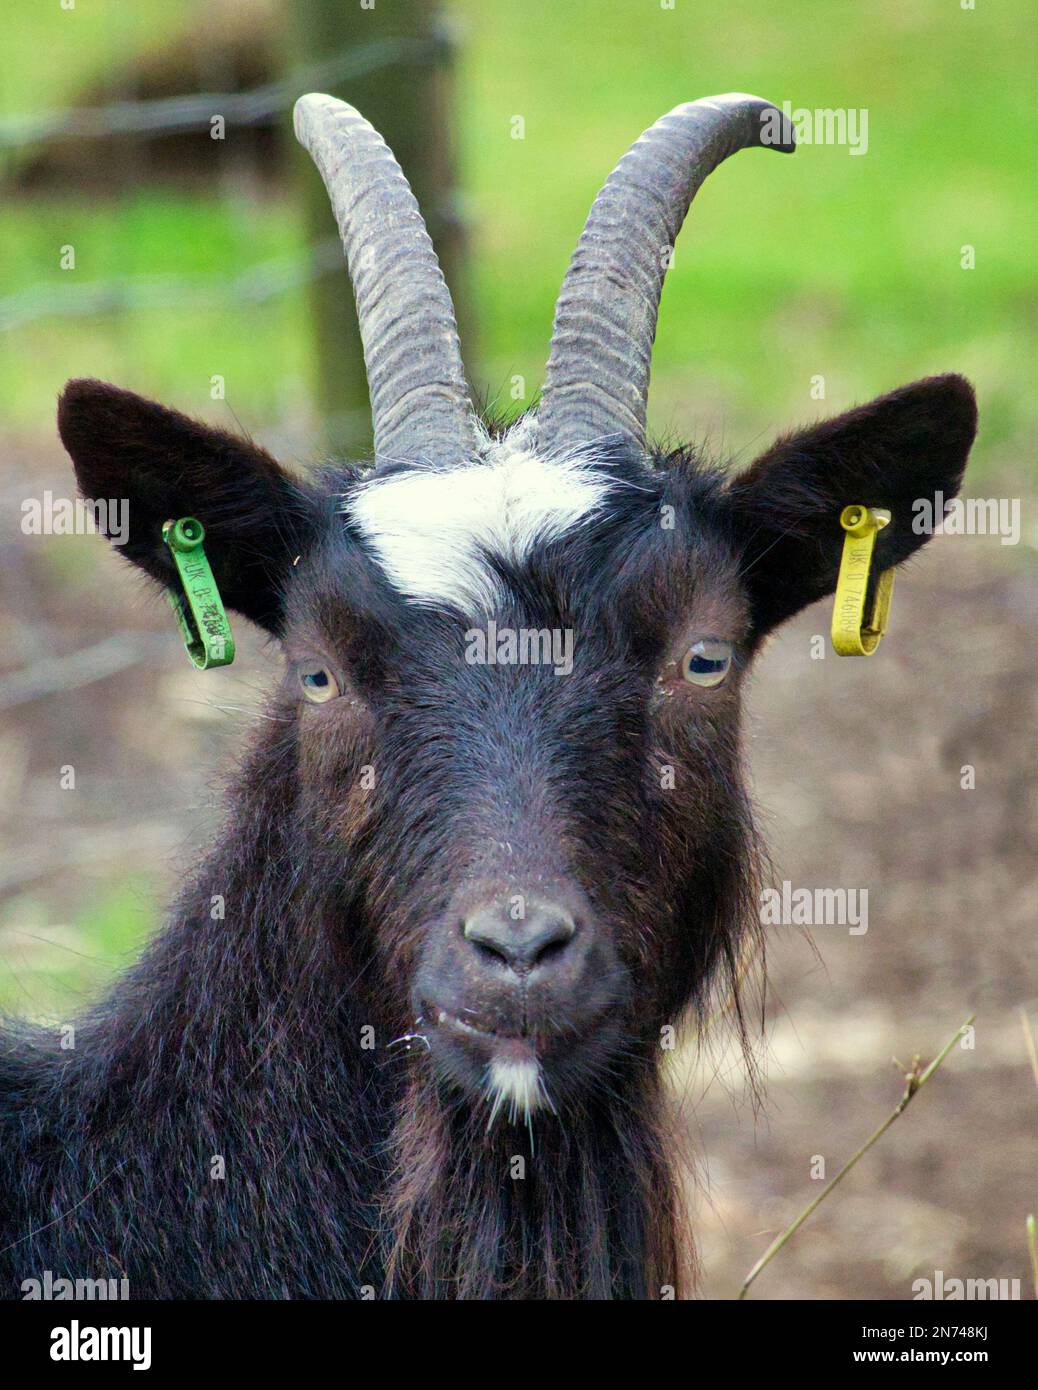 Bagot goat evil looking with tags that look like earrings in edinburgh zoo Stock Photo